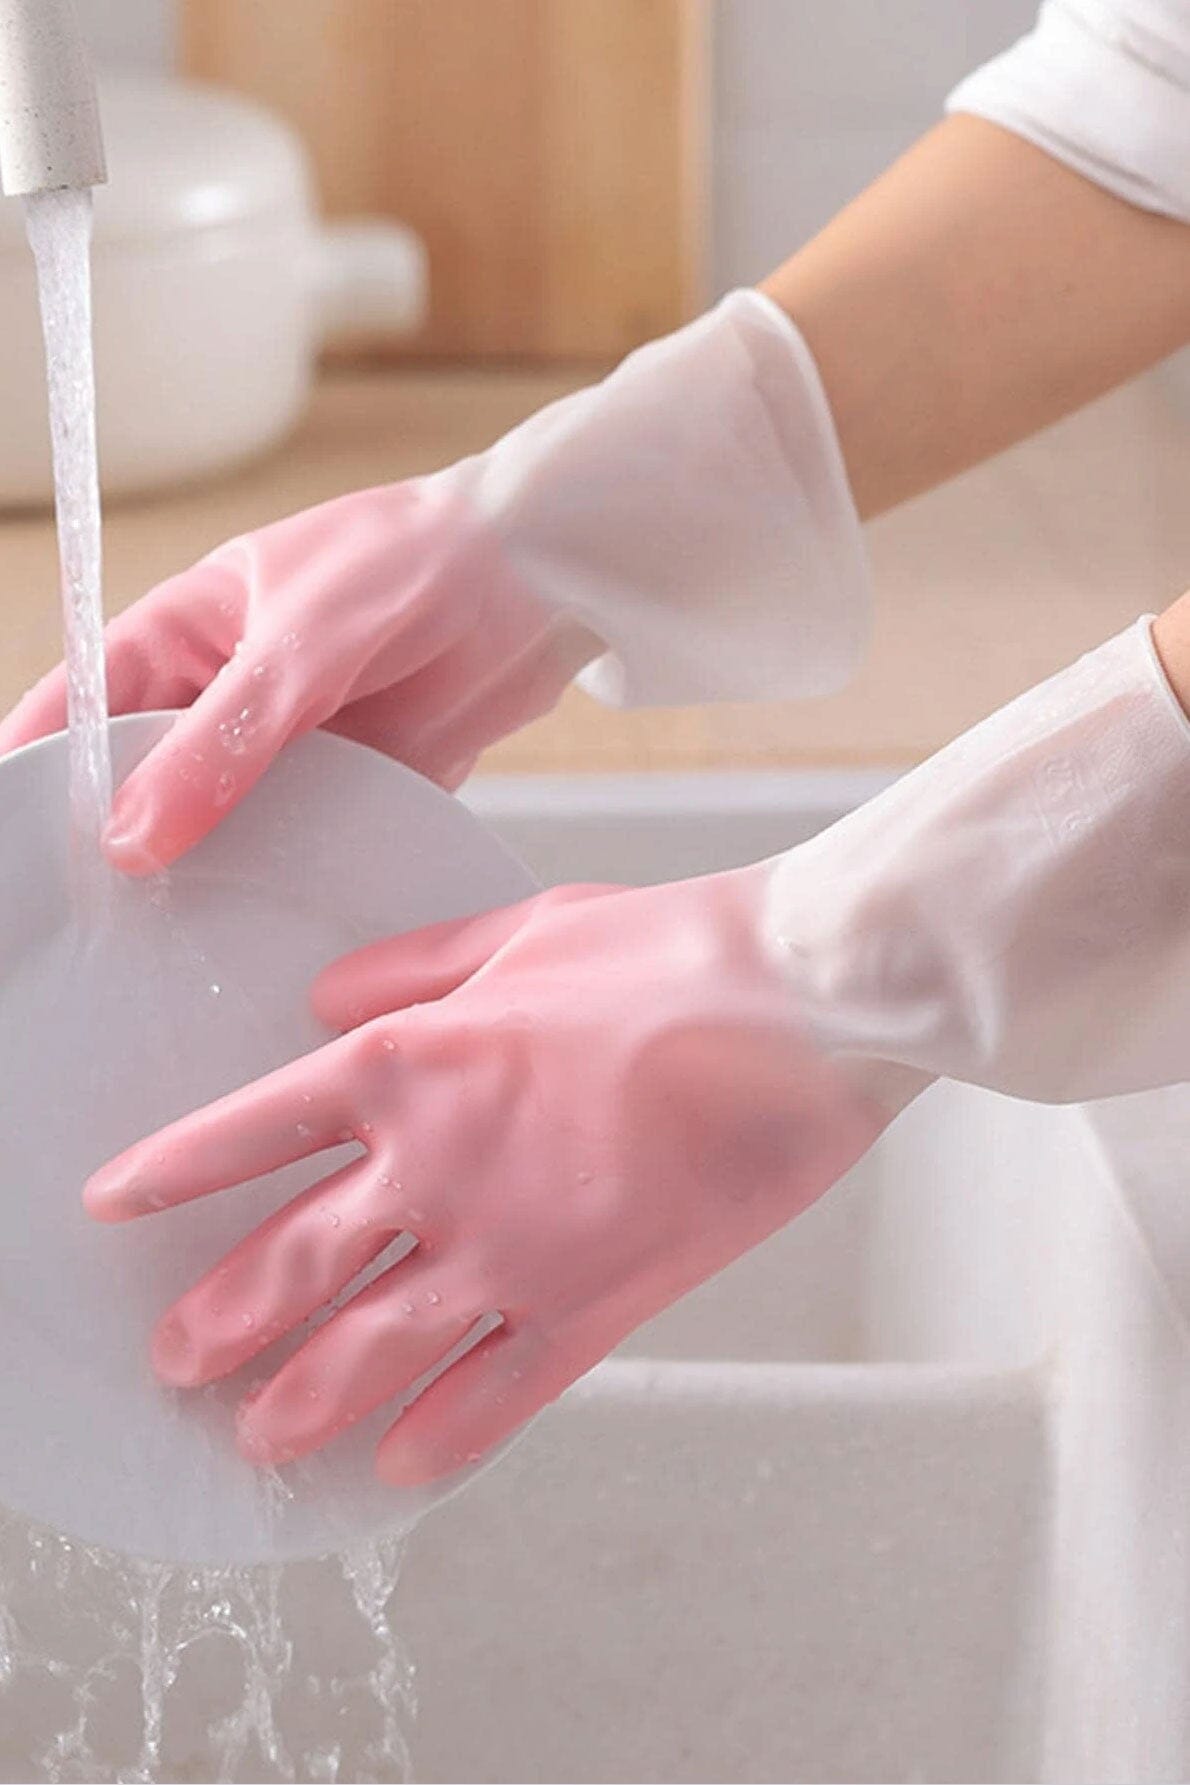 Household PVC Longshou Cleaning Gloves